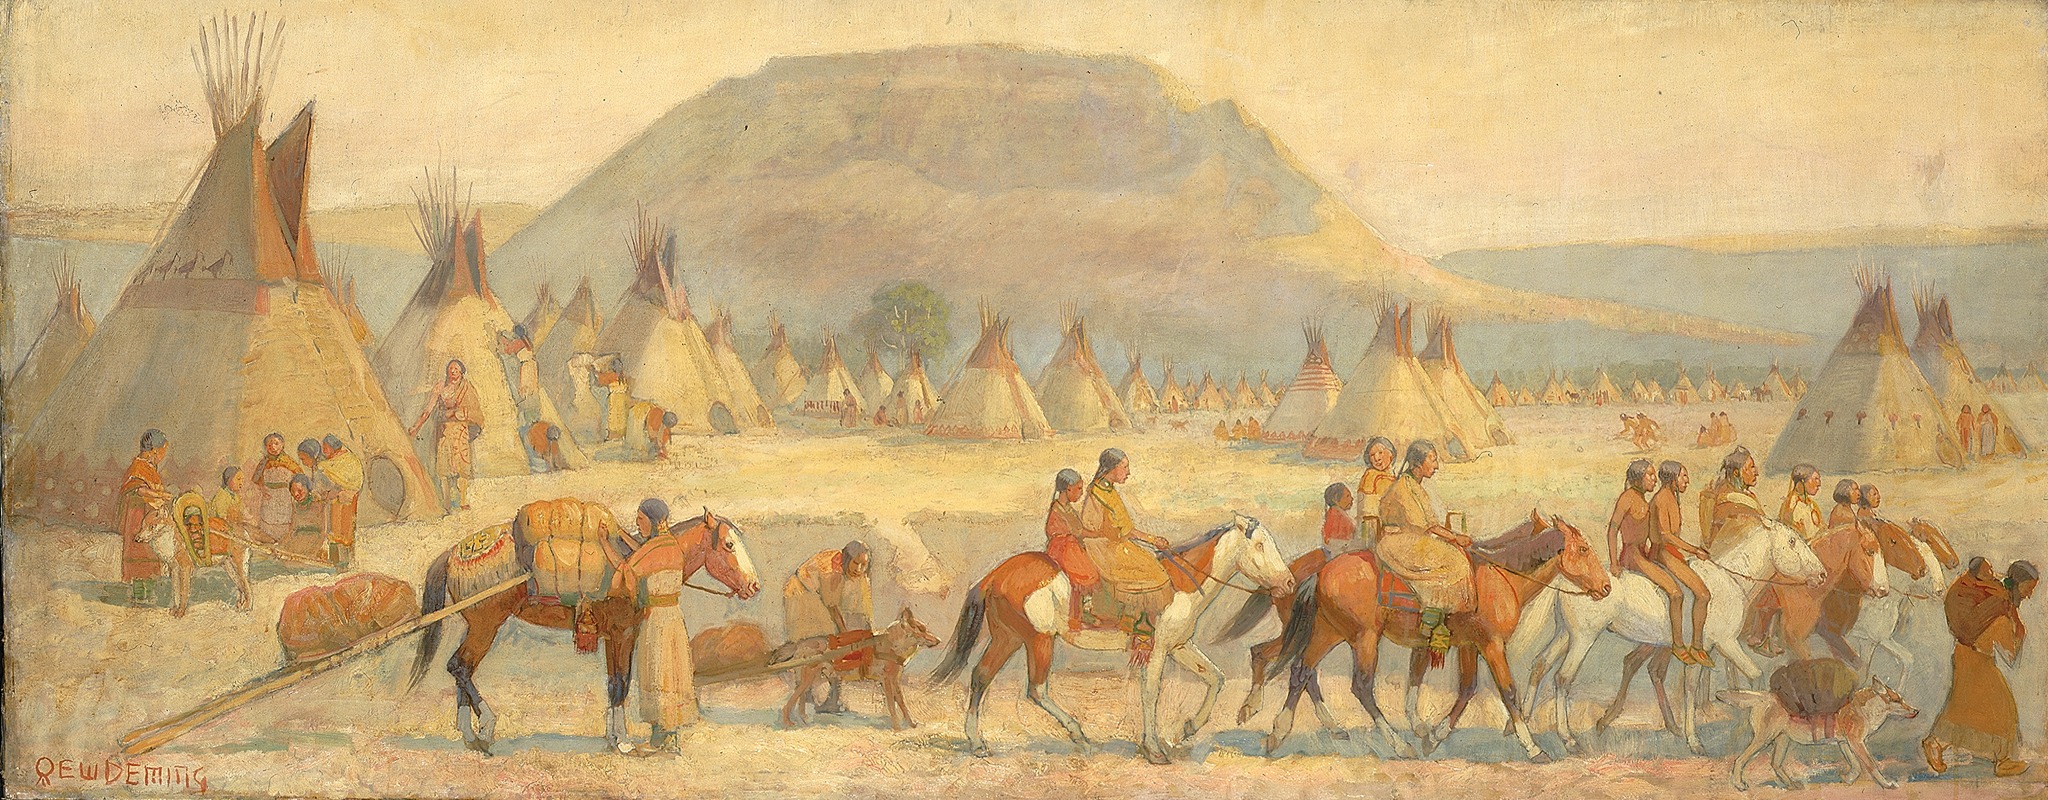 Edwin Willard Deming - Blackfoot Camp Scene